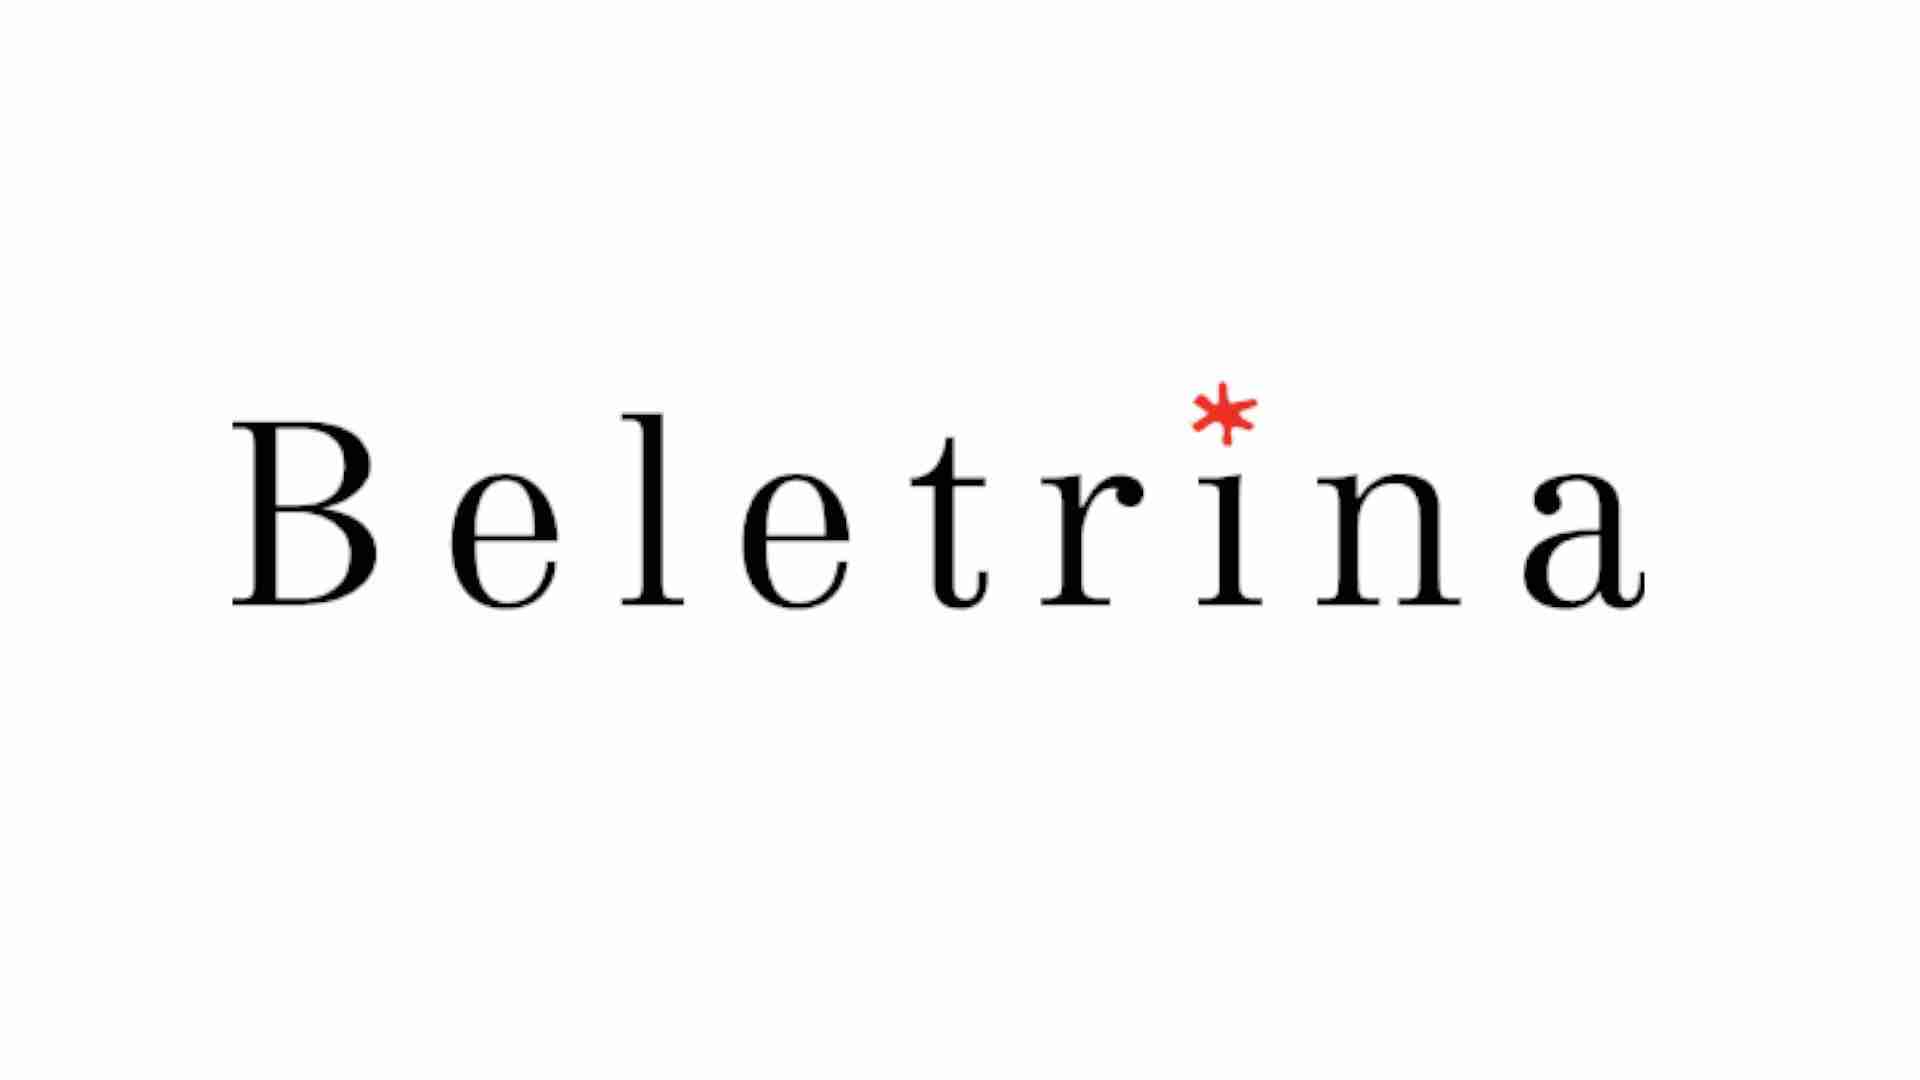 Beletrina